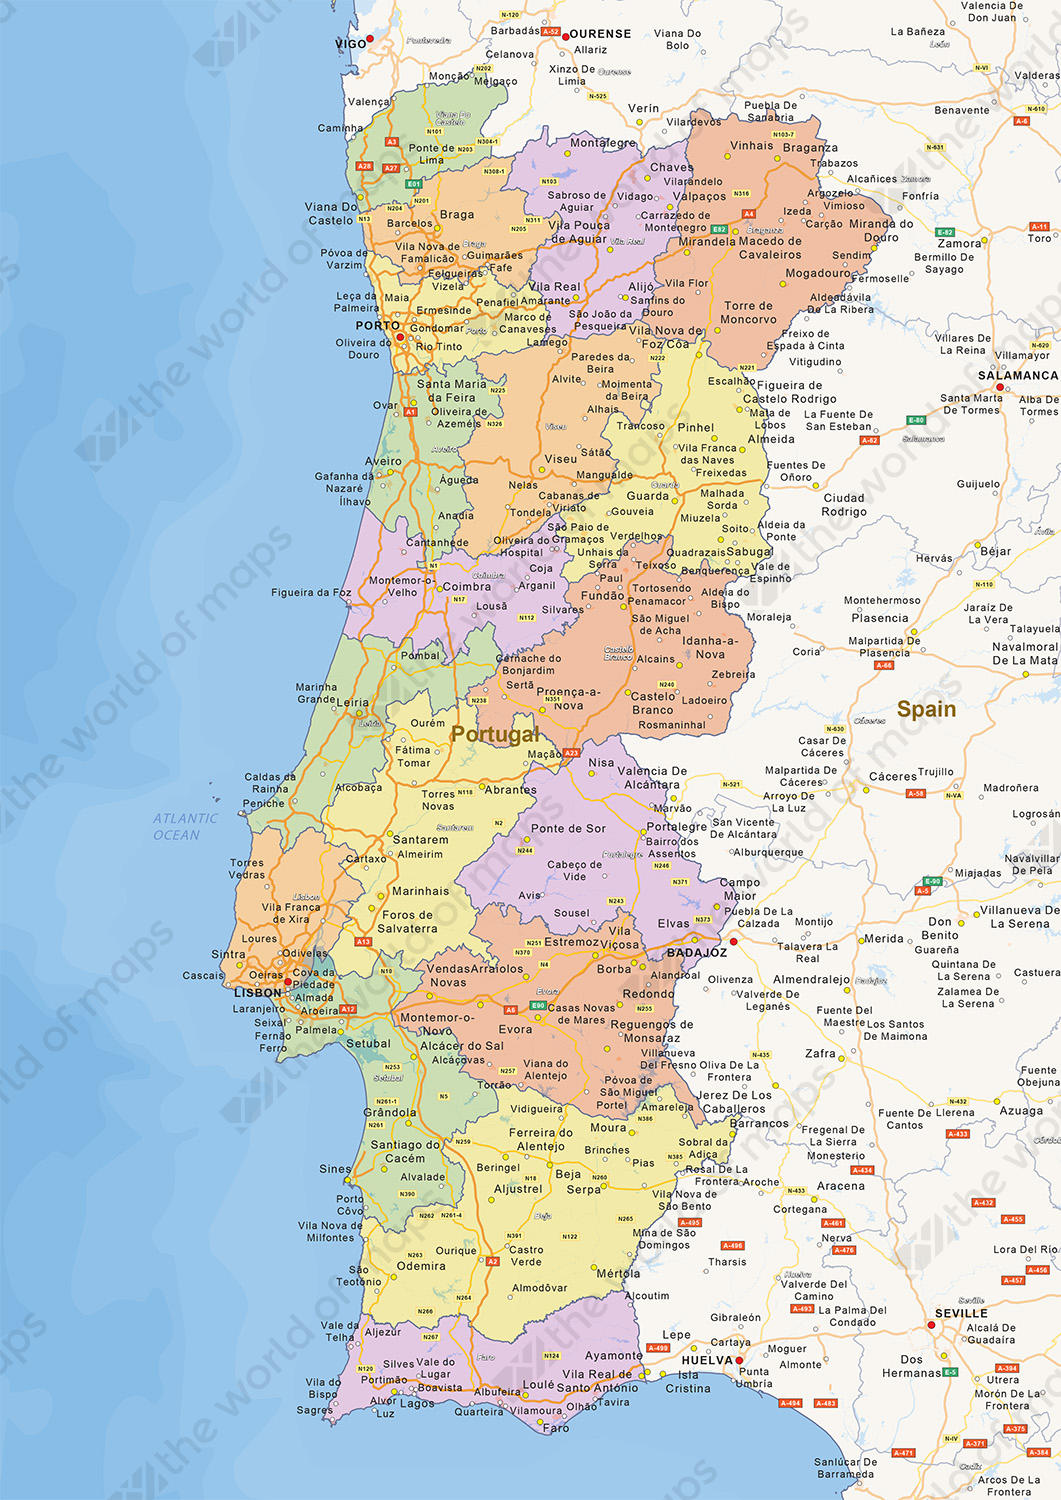 Digital political map of Portugal